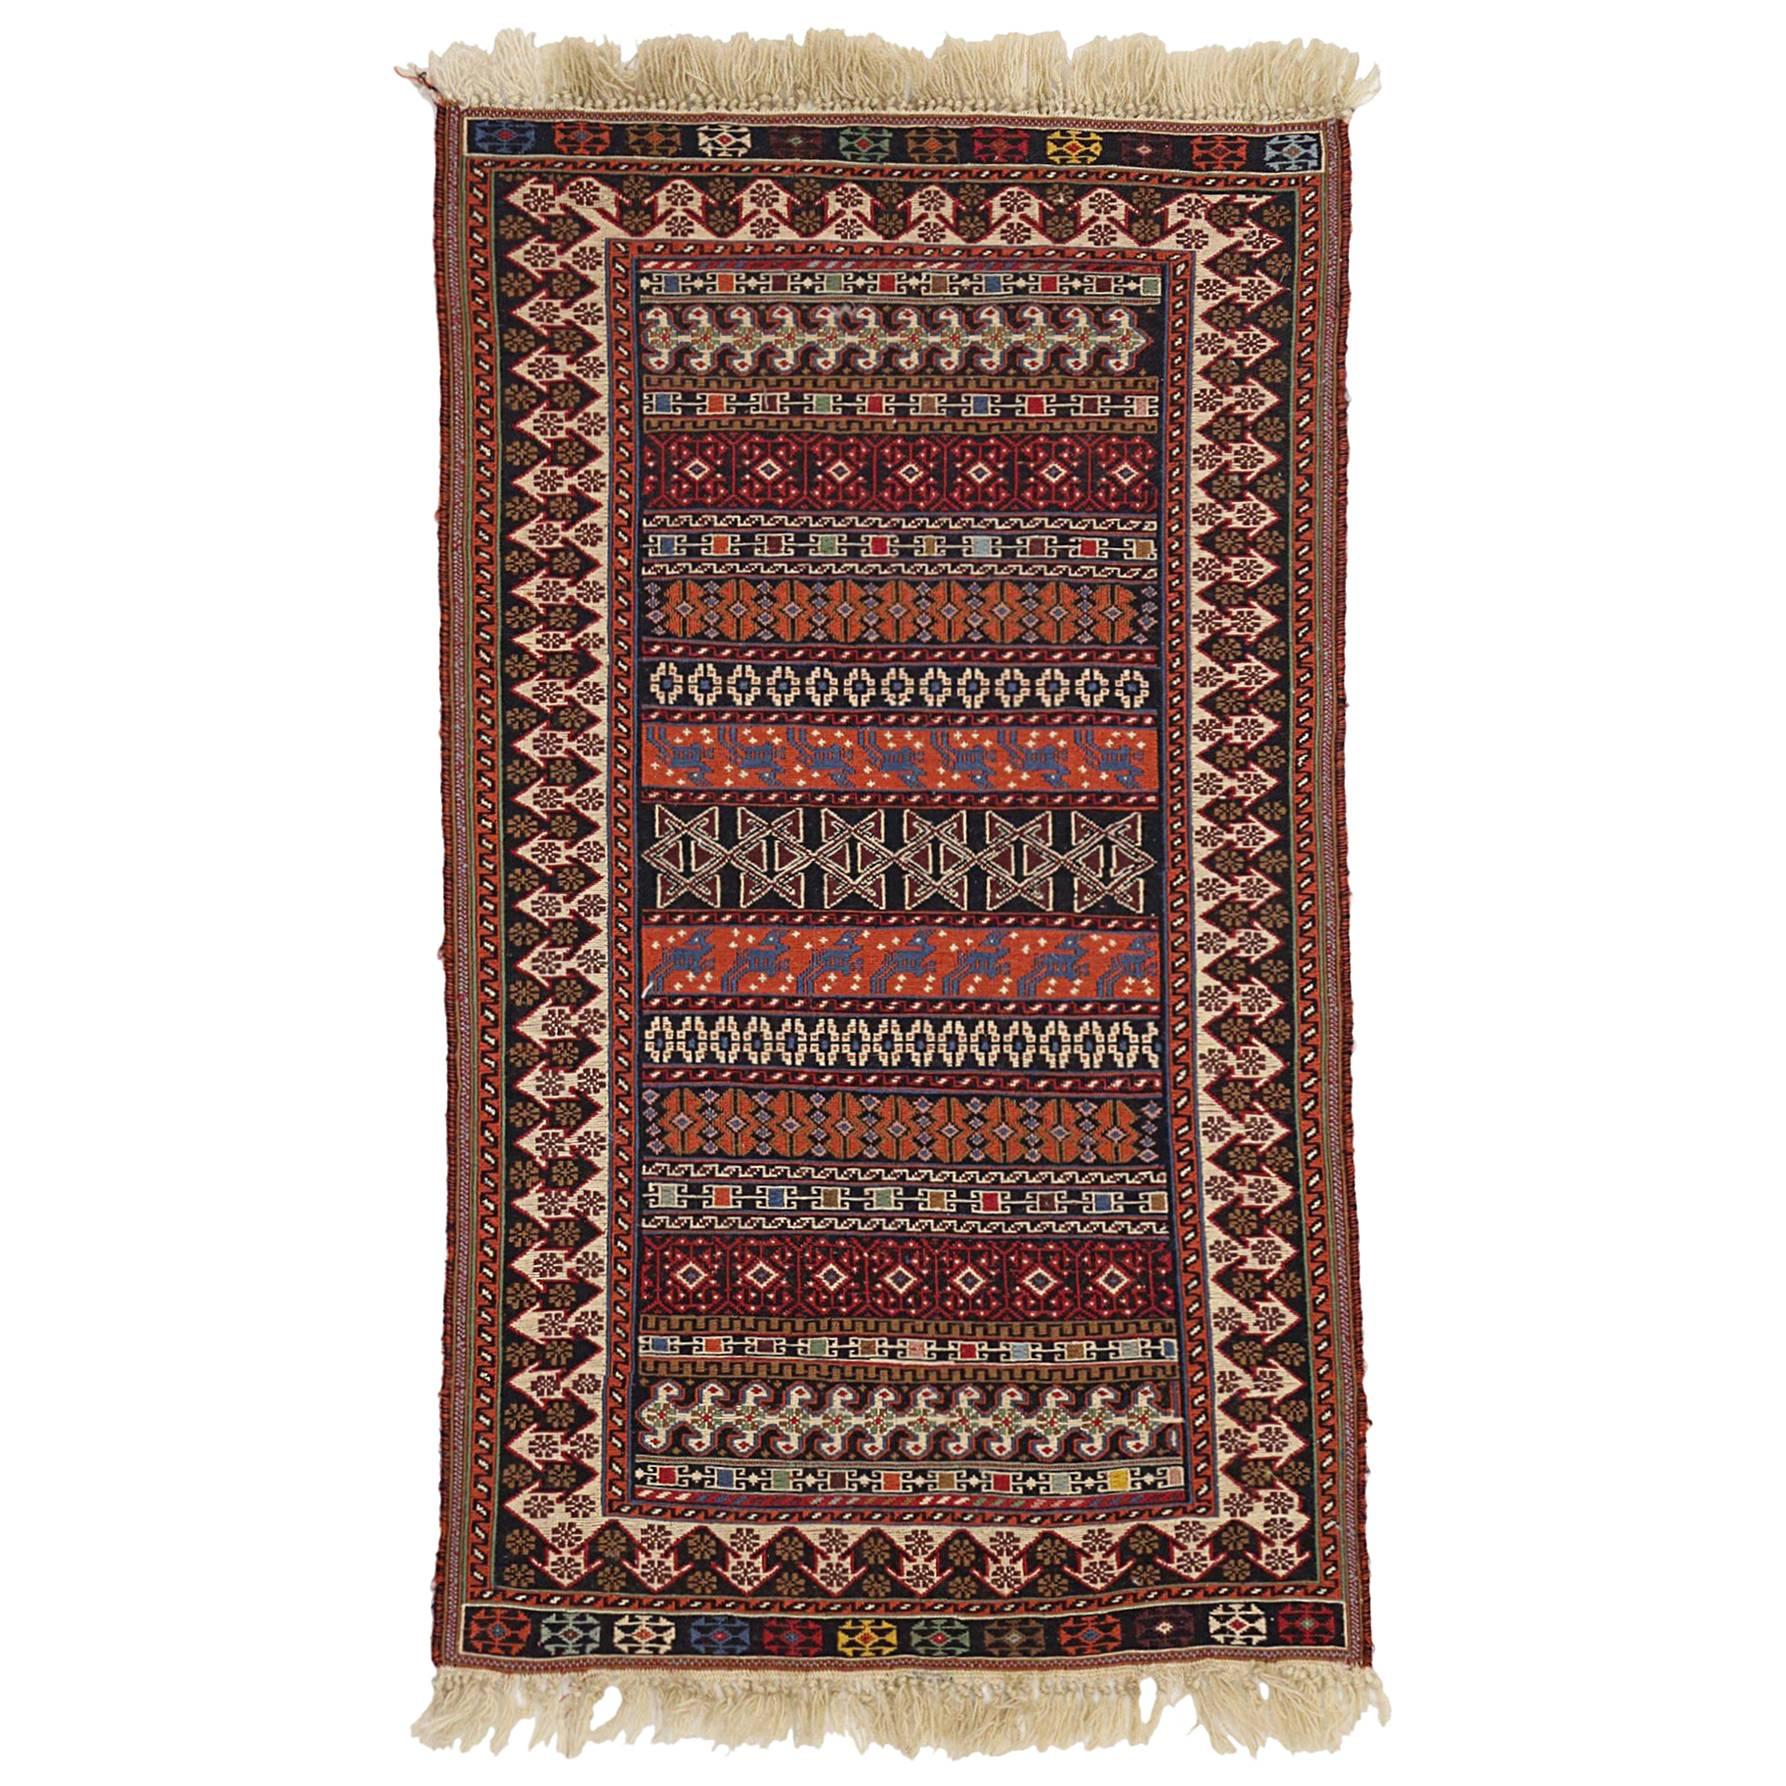 Vintage Turkish Kilim Rug, Small Flat-Weave Rug with Boho Chic Tribal Style